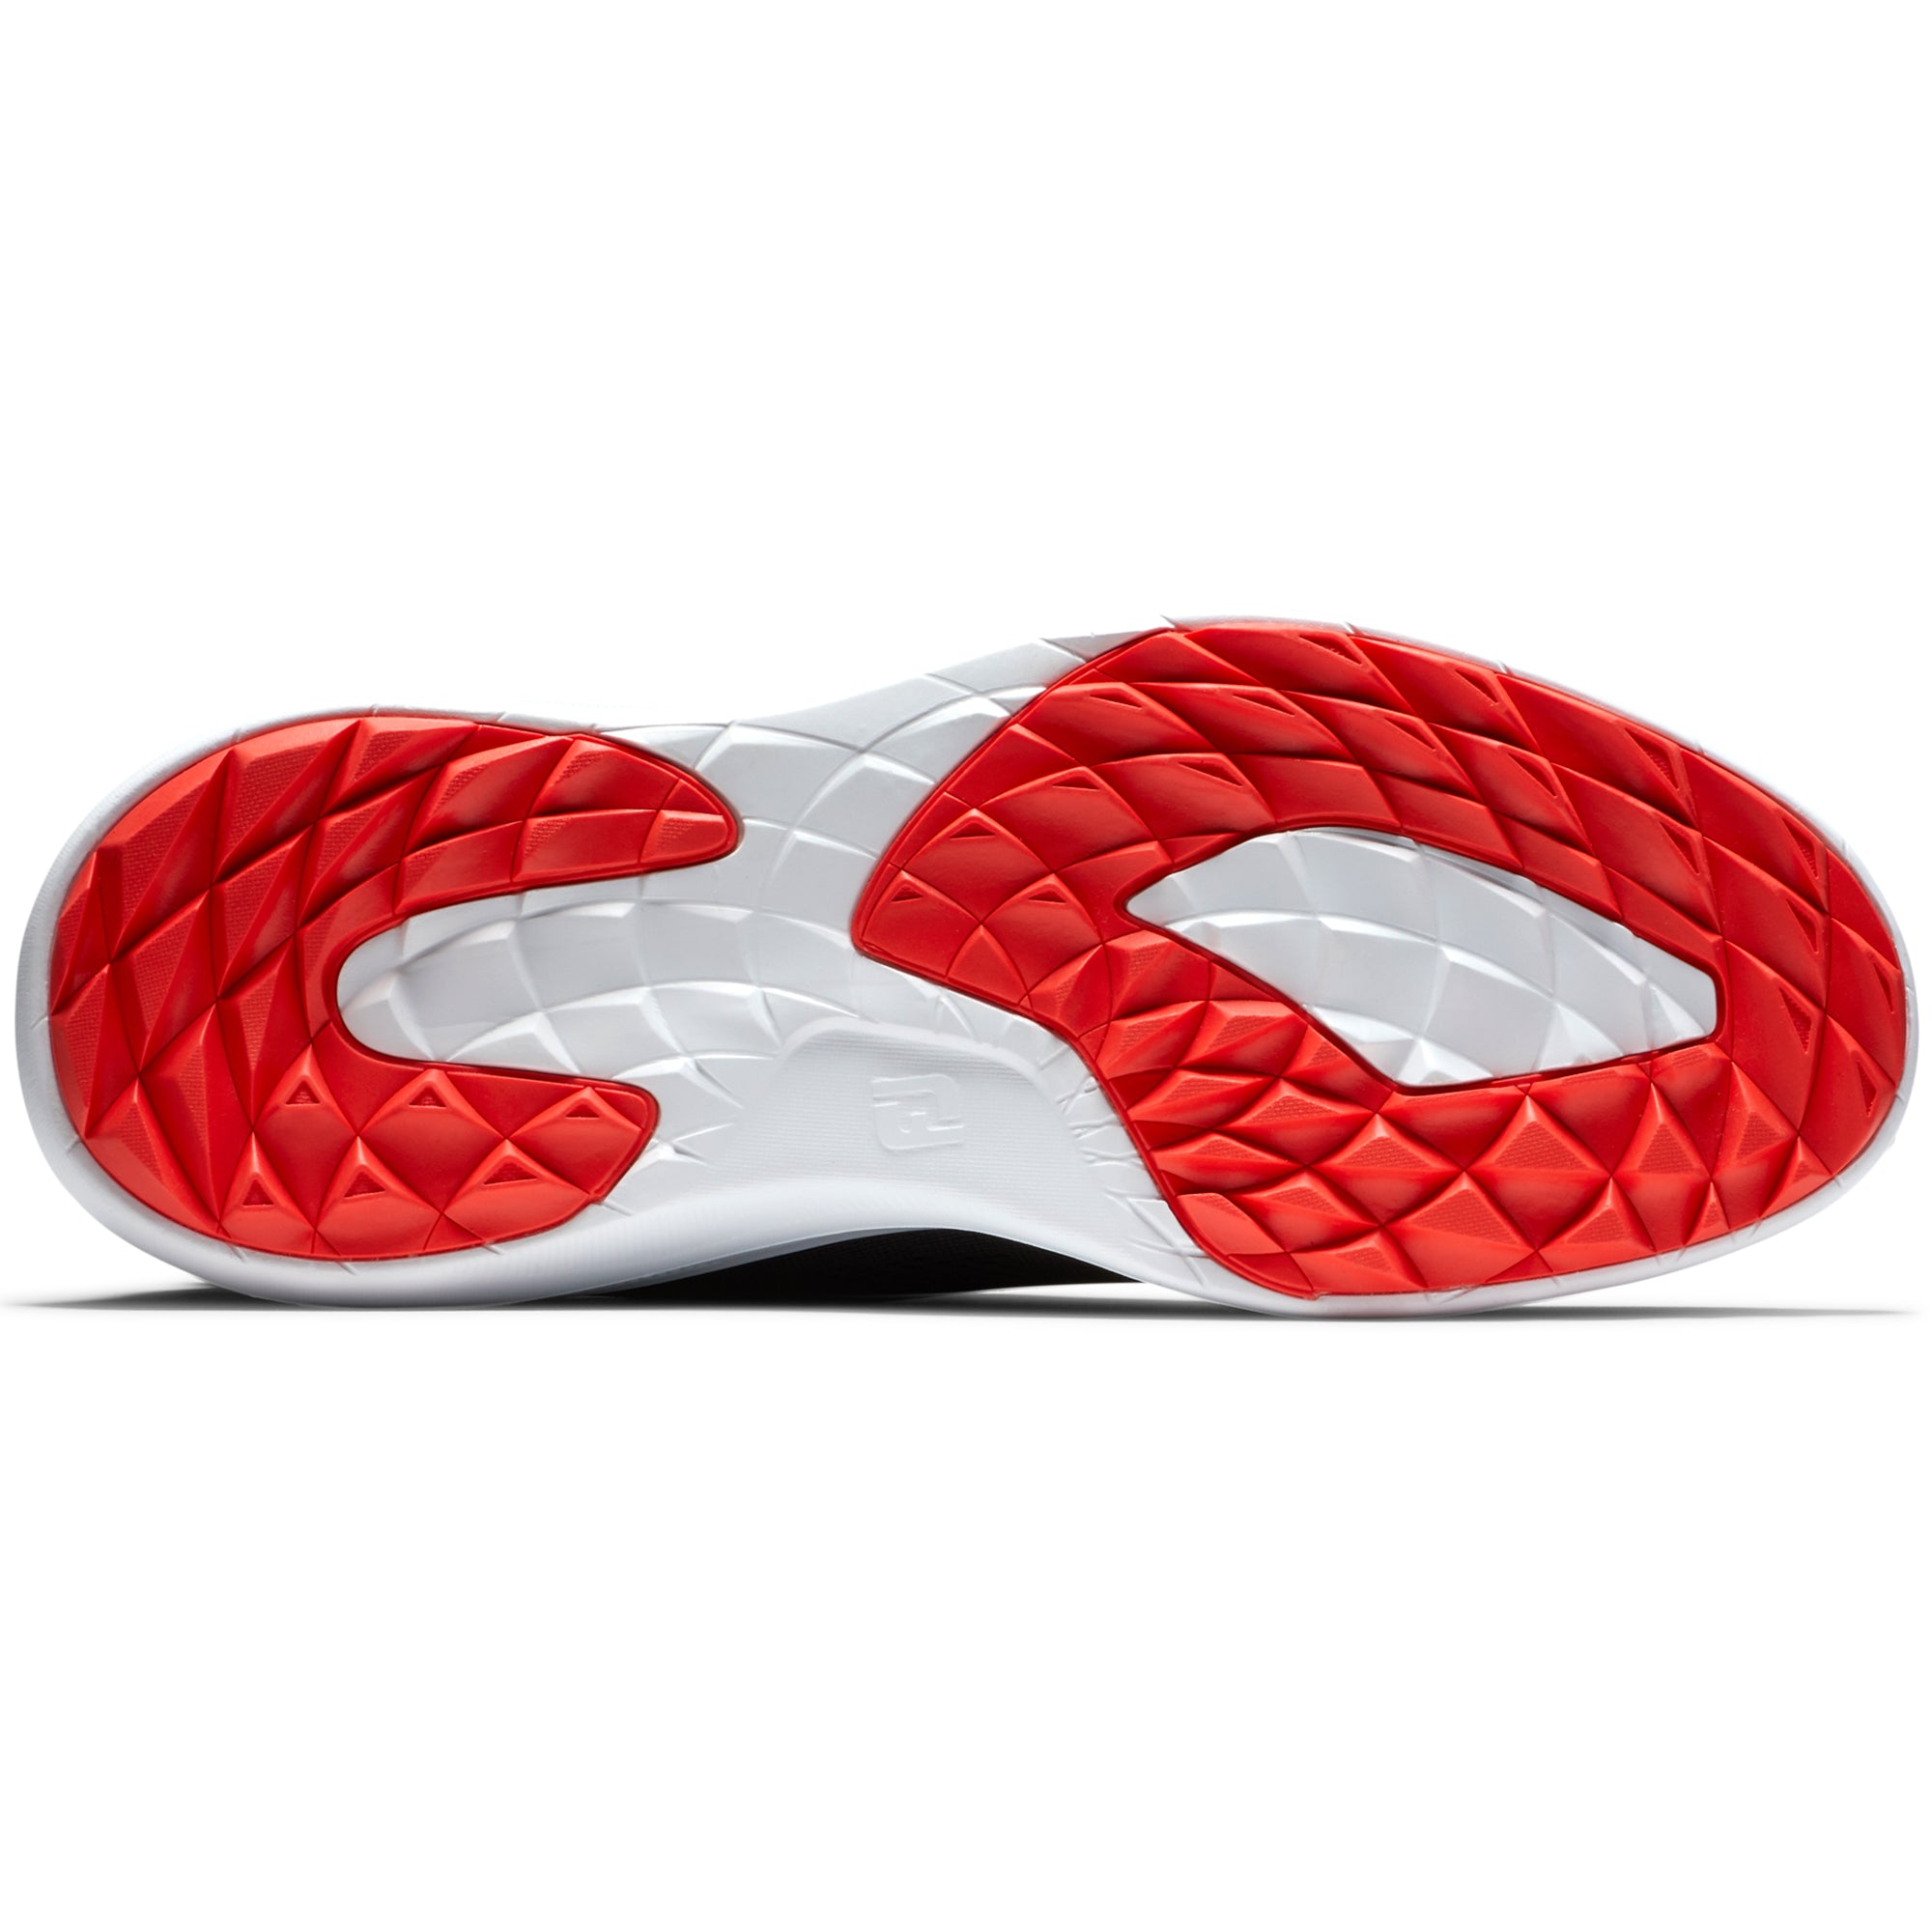 footjoy-fj-flex-athletic-golf-shoes-56141-black-white-red